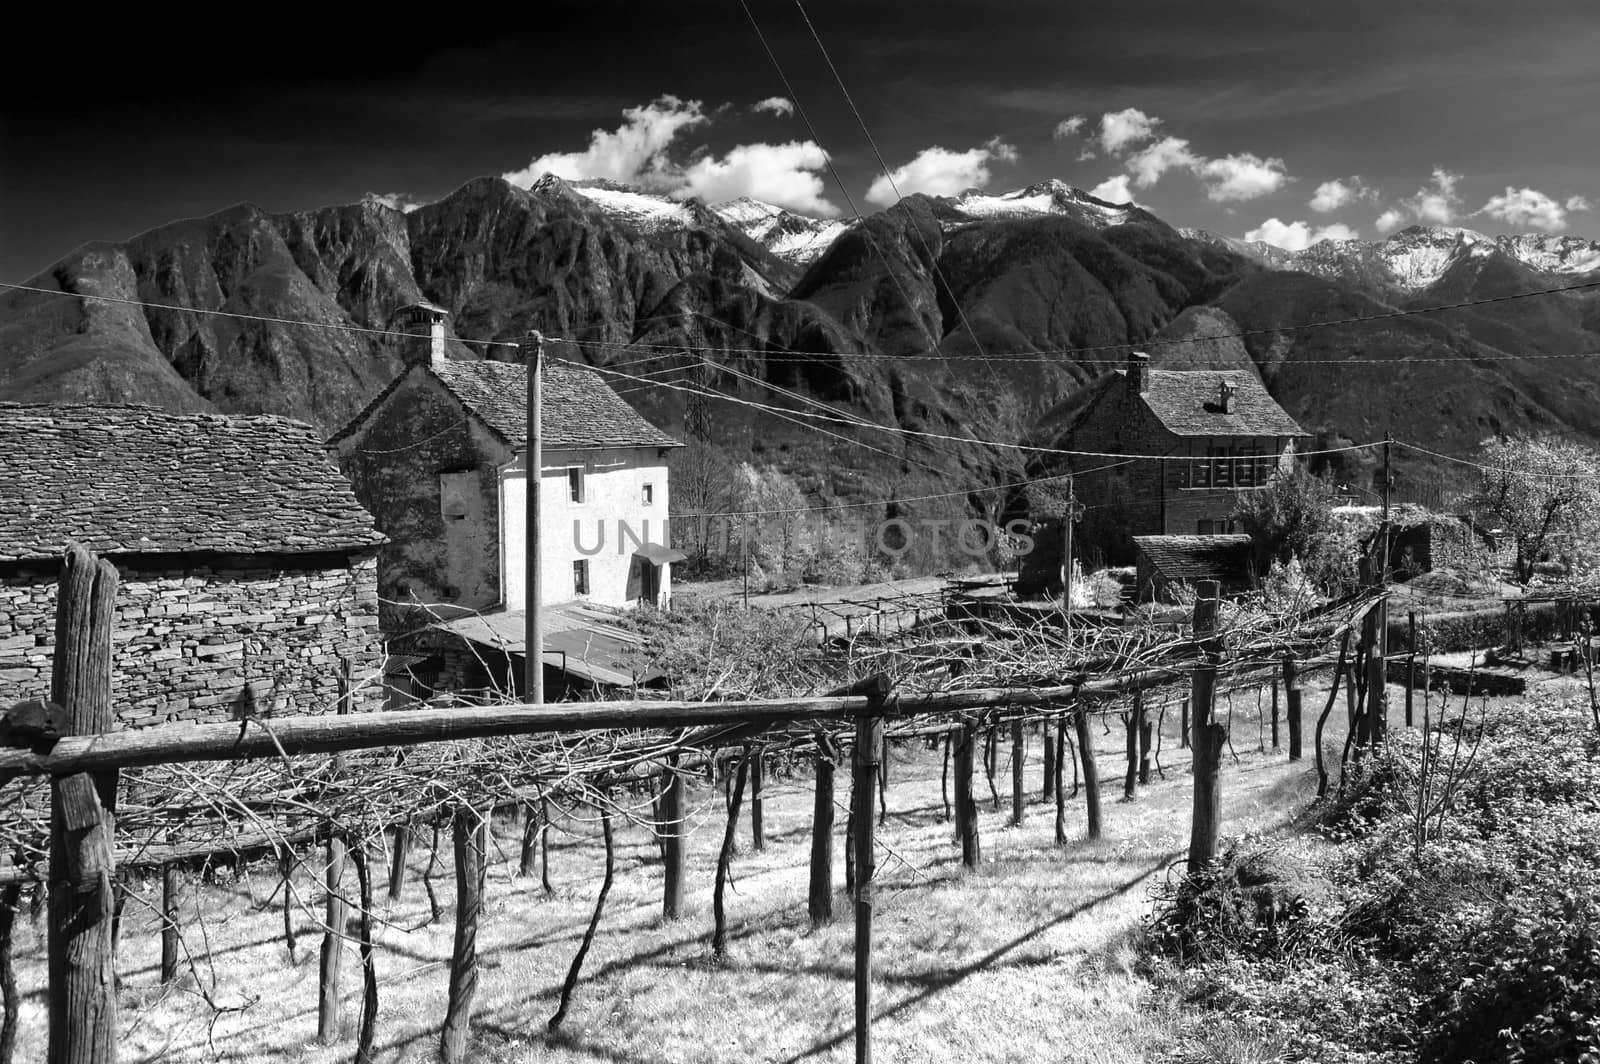 infrared b&w image of an alpine village, Domodossola, Italy